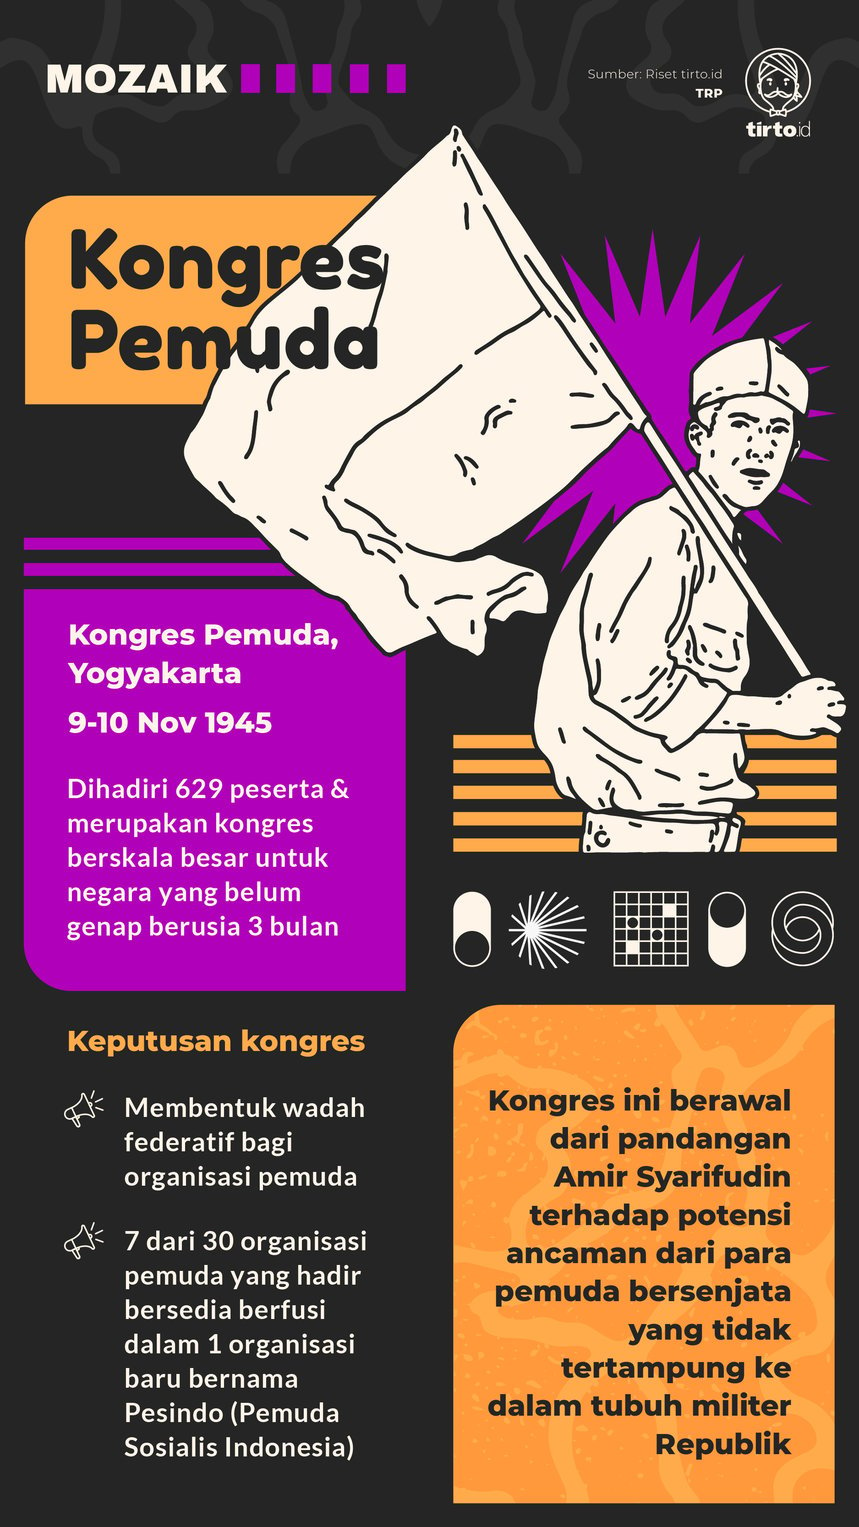 Infografik Mozaik Kongres Pemuda